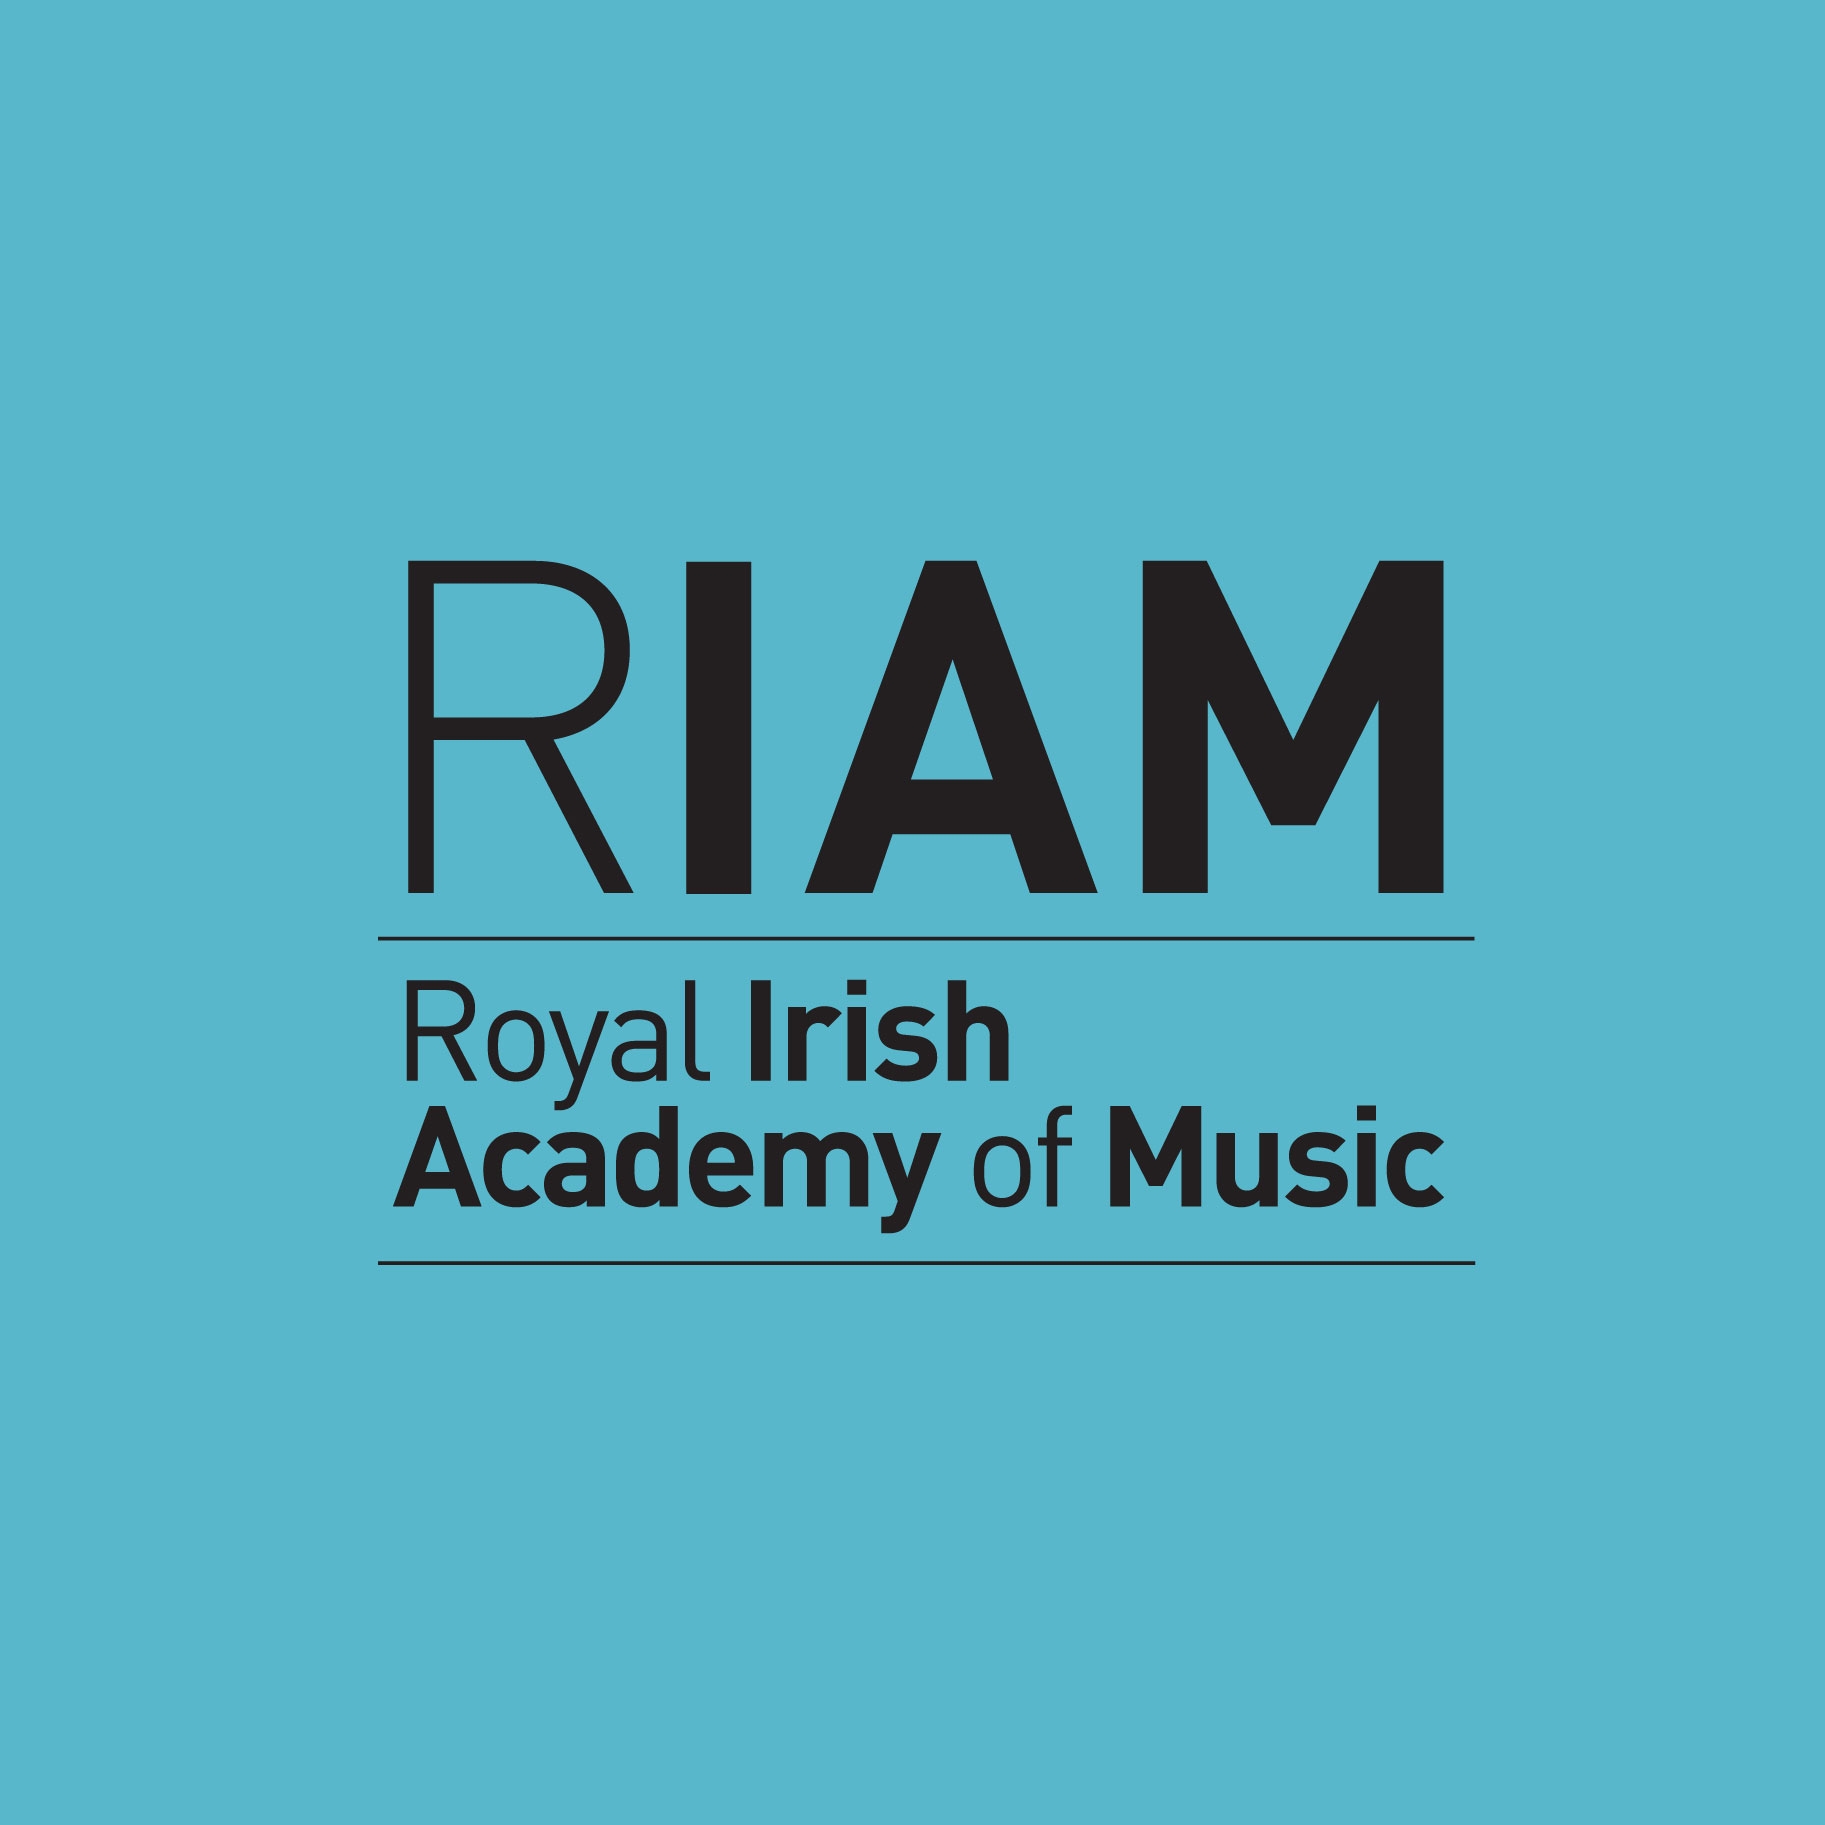 The Royal Irish Academy of Music